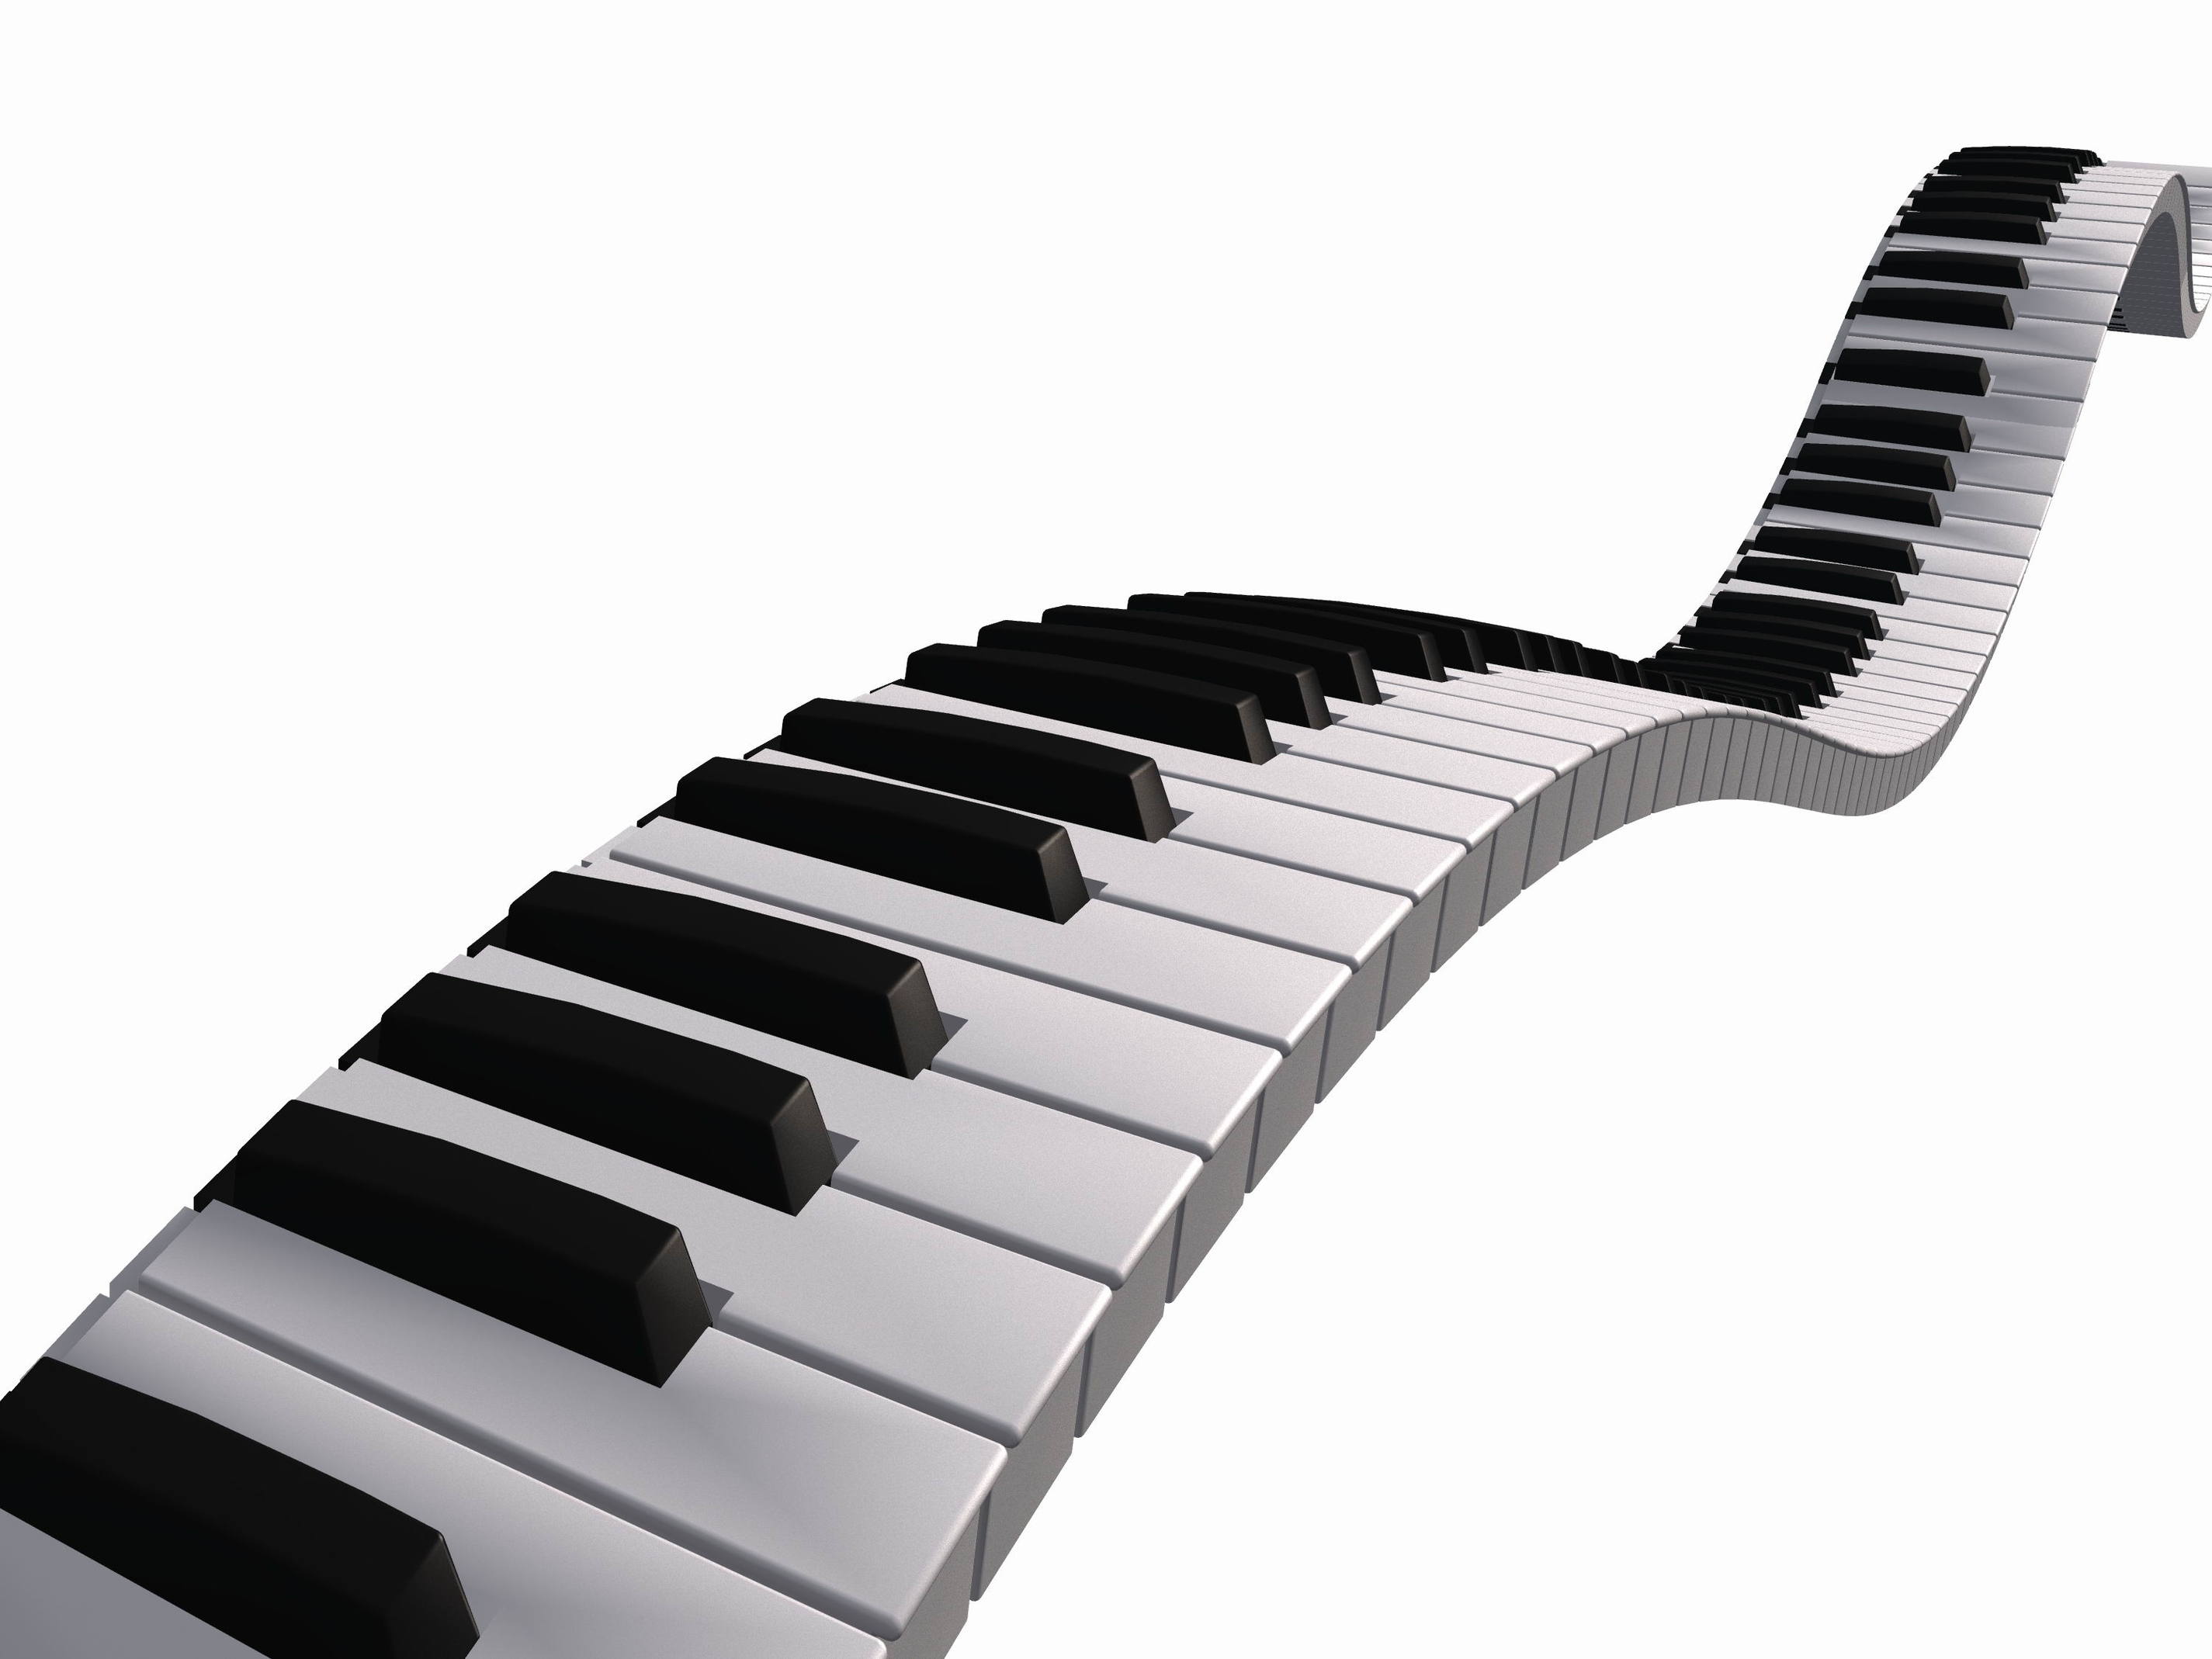 Clip Art Piano Keys Clipart piano keyboard clipart best keys clip art